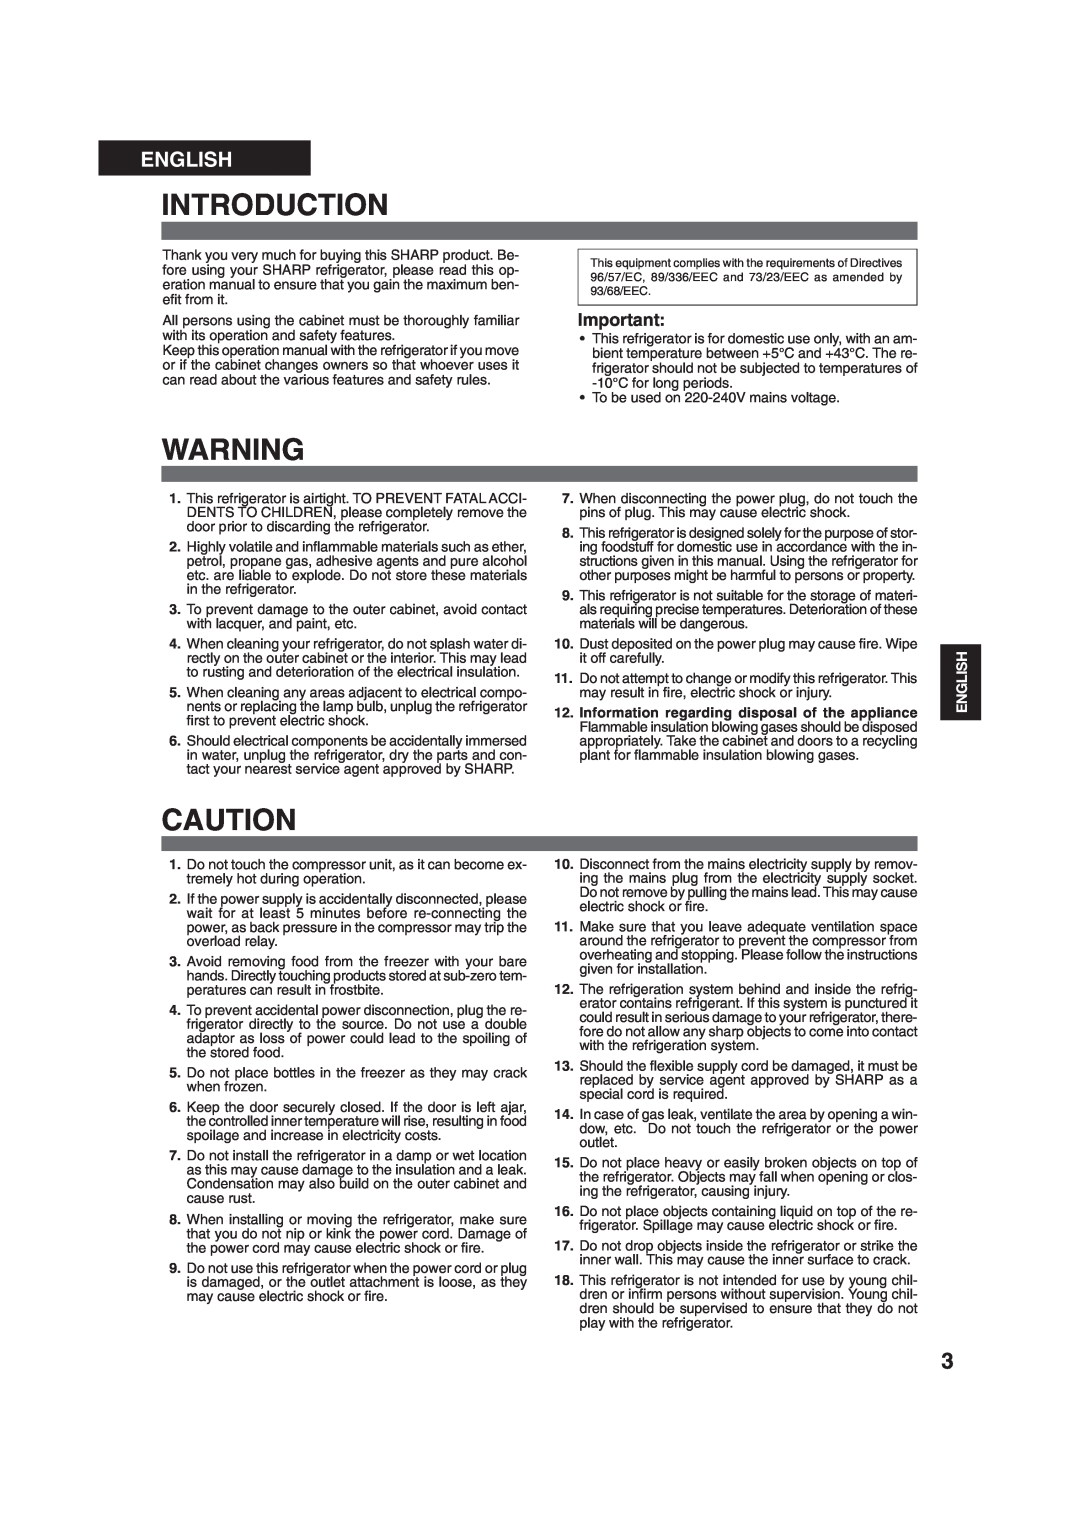 Sharp SJ-25P operation manual Introduction, English 